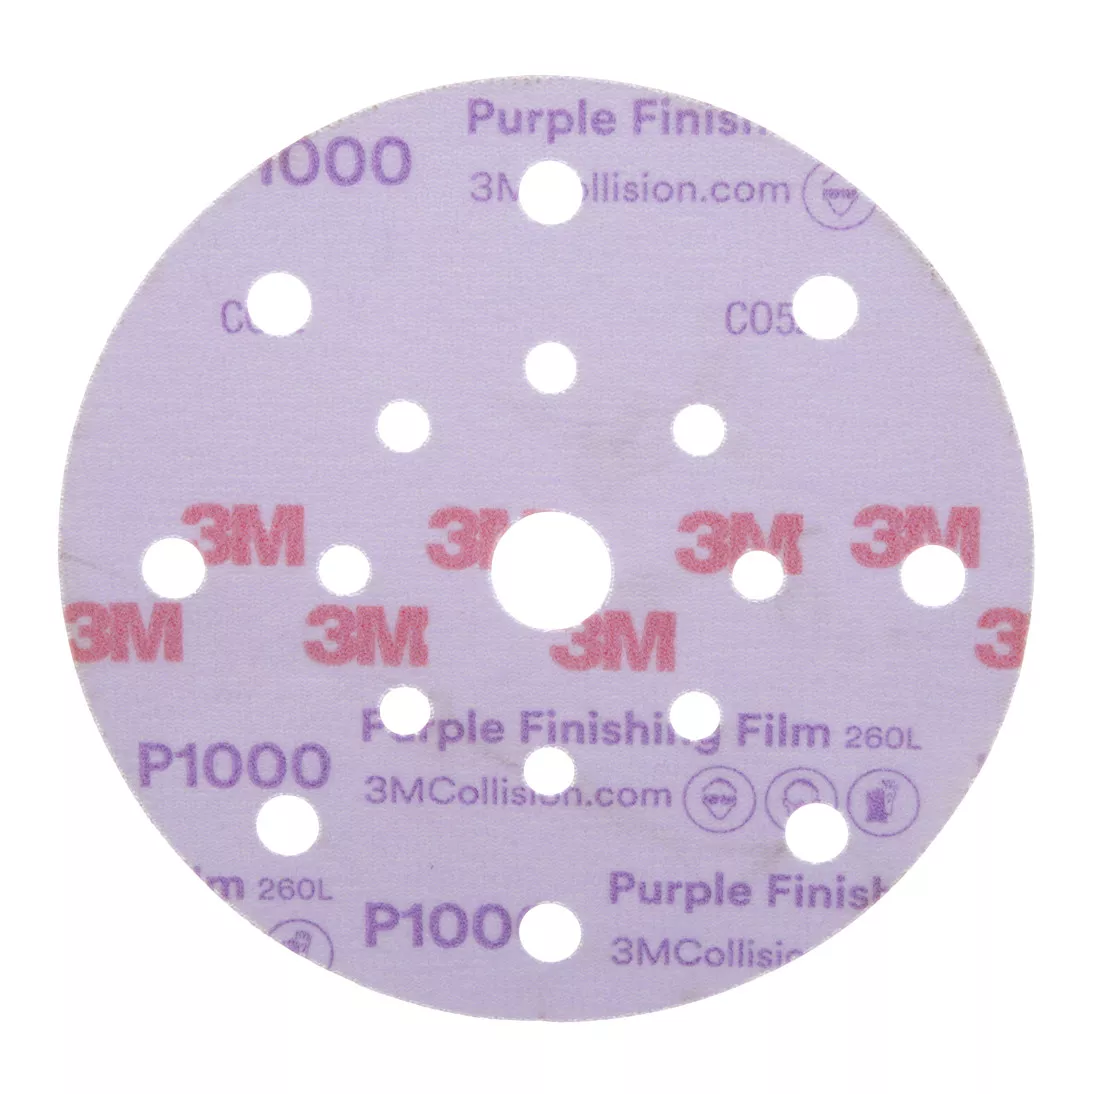 3M™ Hookit™ Purple Finishing Film Abrasive Disc 260L, 34782, 6 in, Dust
Free, P1000, 50 discs per carton, 4 cartons per case